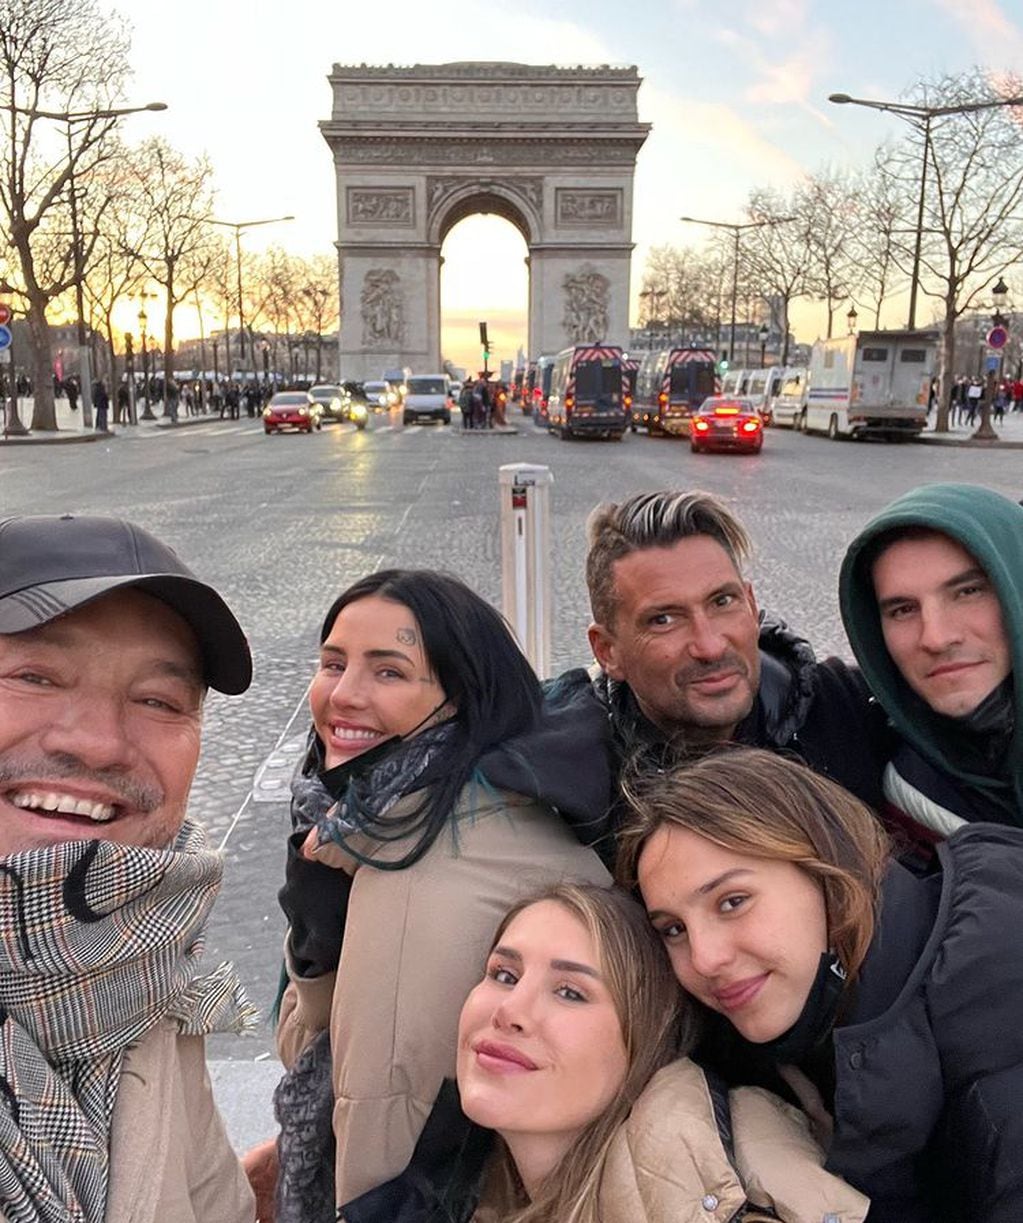 La familia Tinelli se mostró posando junto al Arco del triunfo en Paris